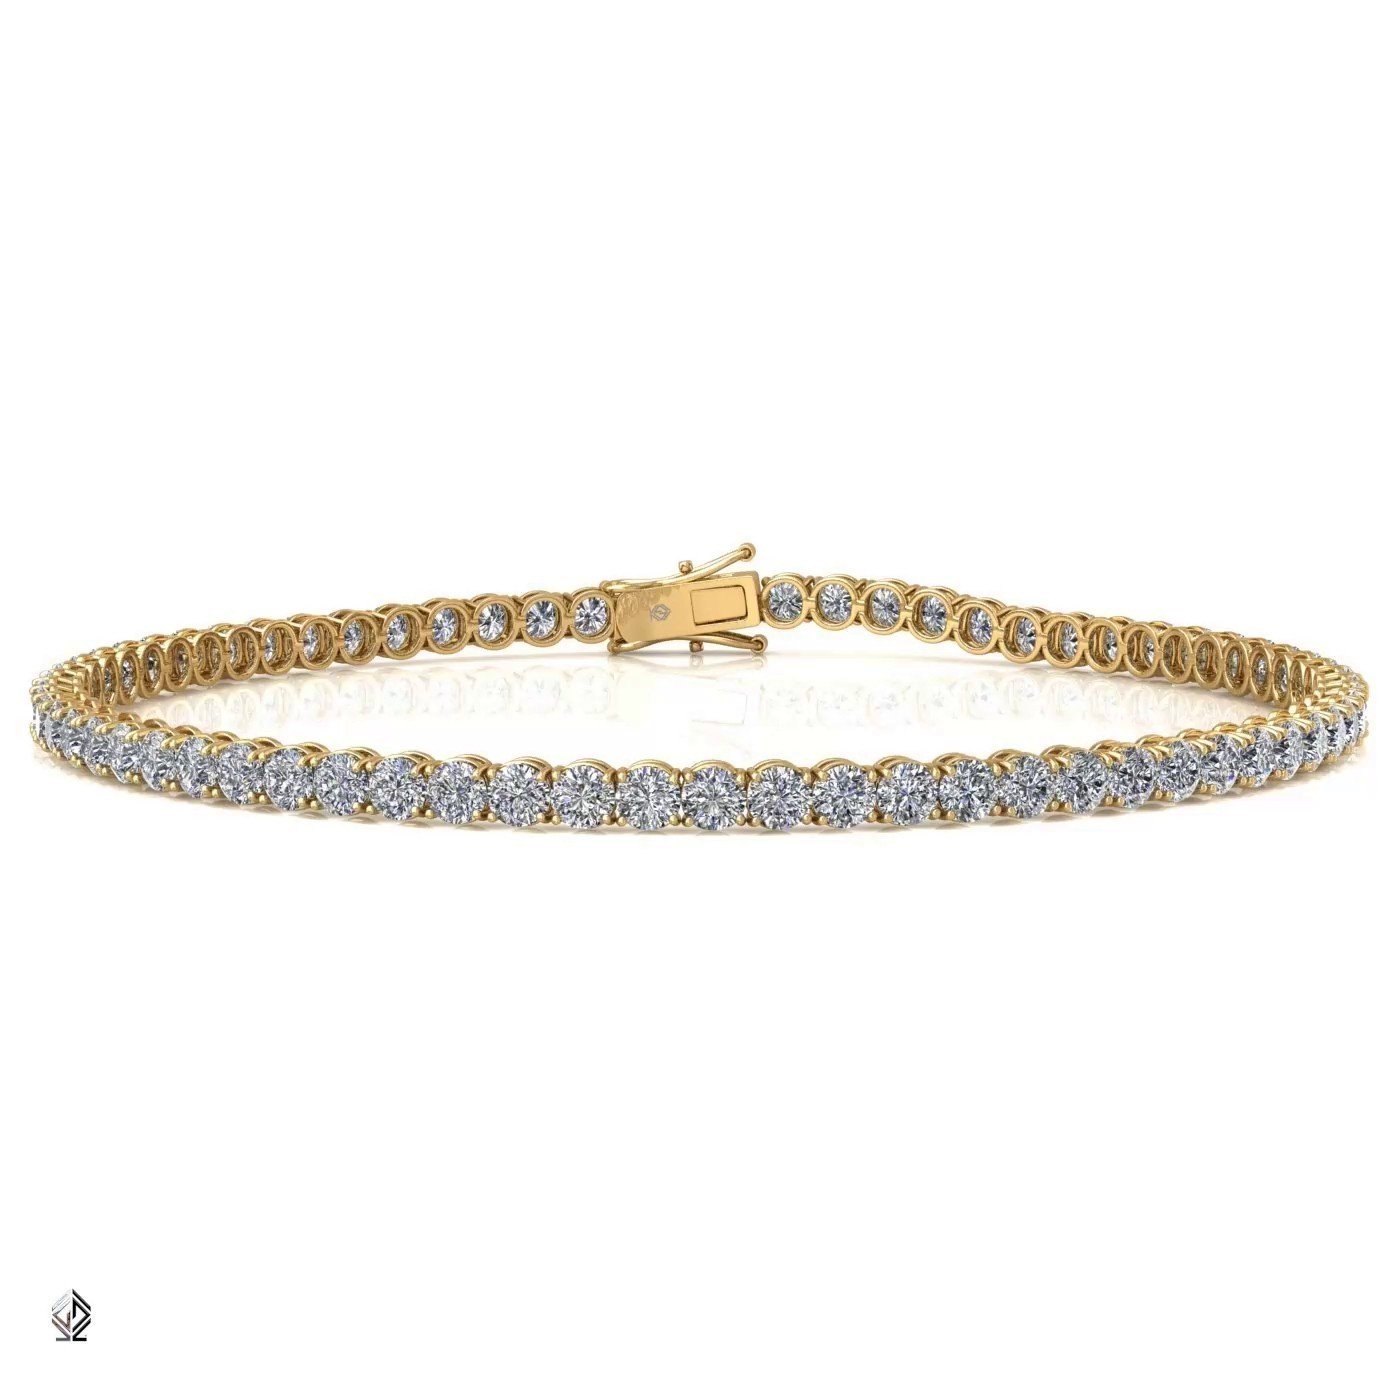 18k white gold 2.0mm 4 prong round shape diamond tennis bracelet in round setting Photos & images